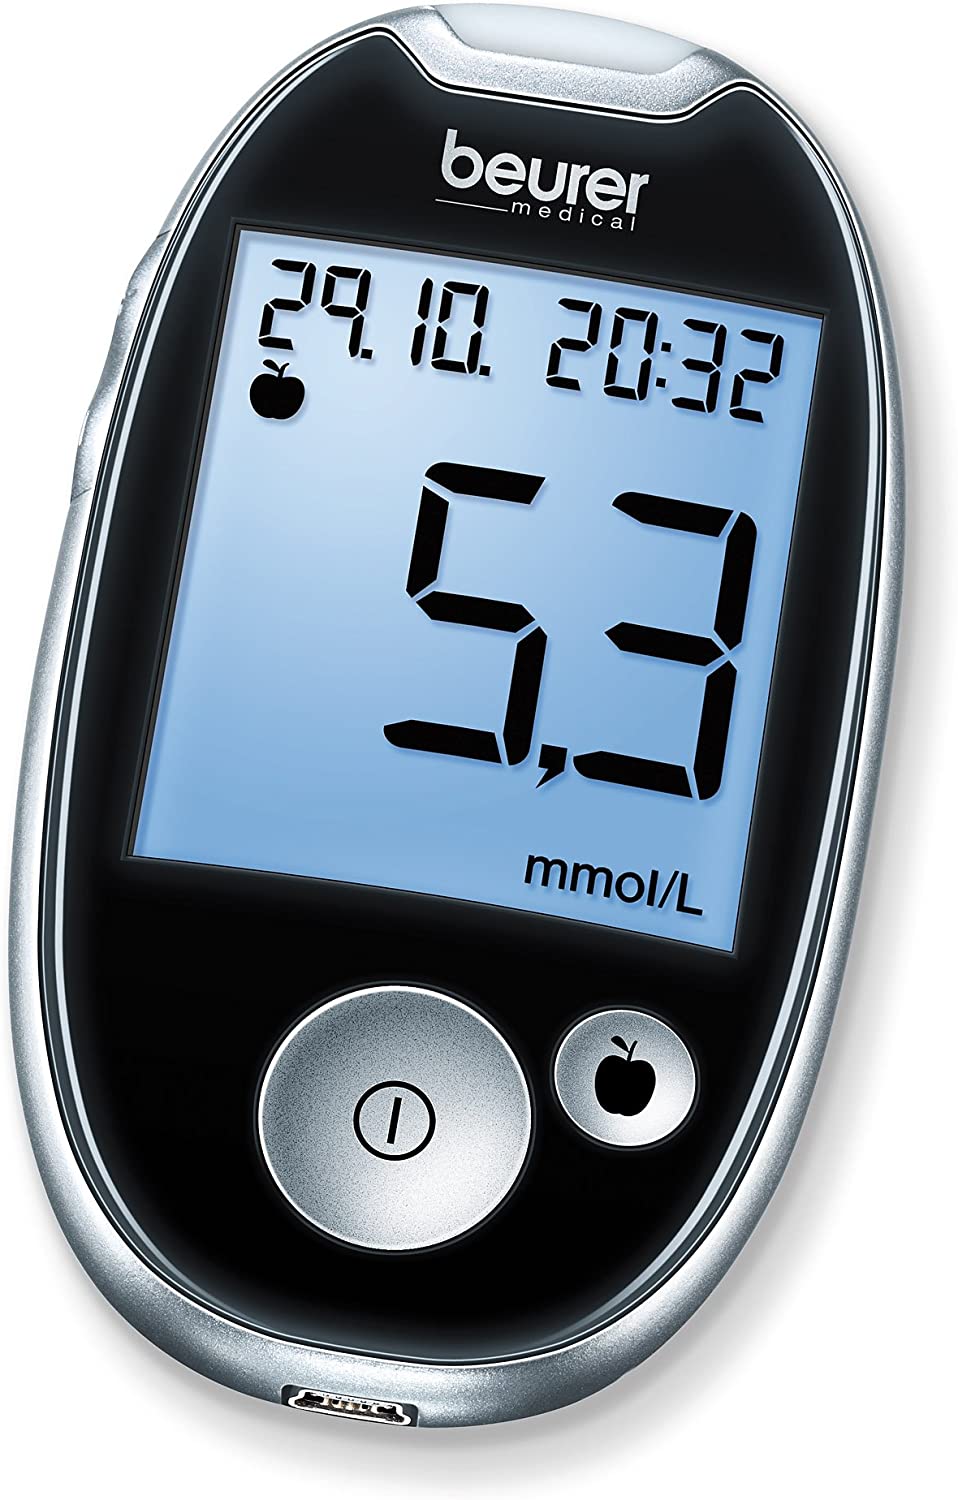 Beurer GL Blood Glucose Monitoring System mmol/L (Black, Secure, Blood Sugar Measurement Wide Test Strips + Blood Flow Control with Health Manager Software App)